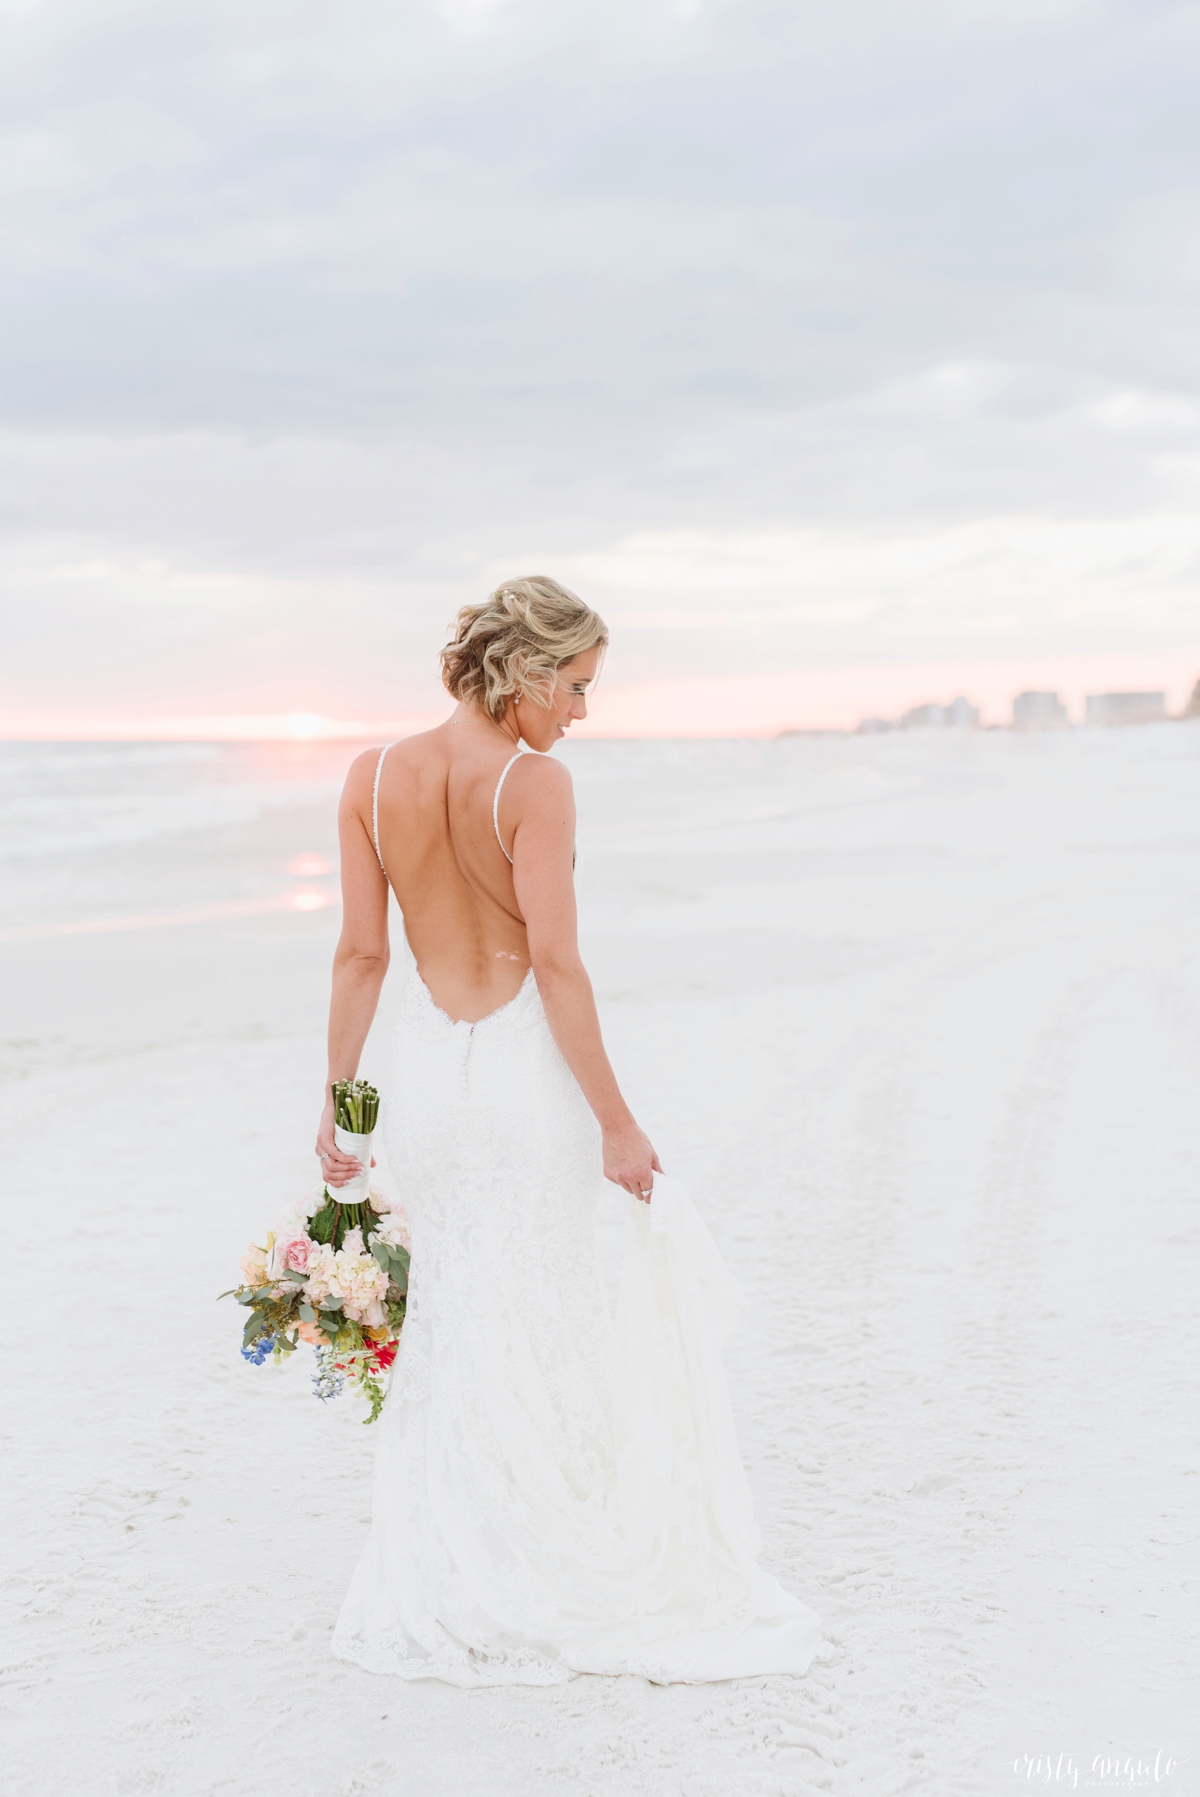 Destin beach wedding by Florida wedding photographer Cristy Angulo | www.cristyangulo.com